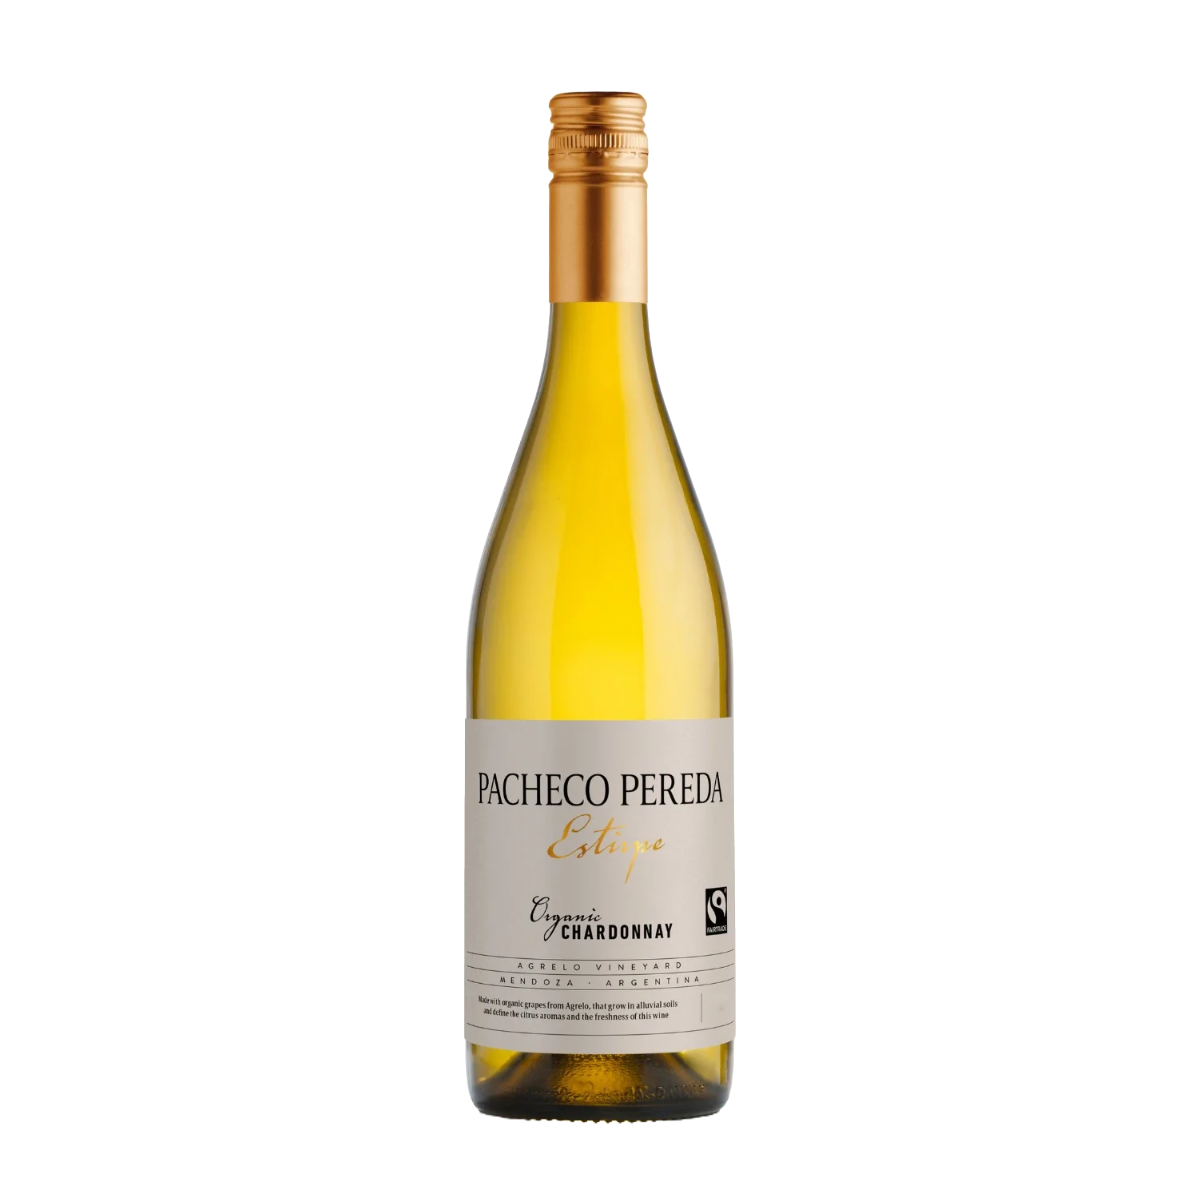 Pacheco Pereda 'Estirpe' Chardonnay 2021